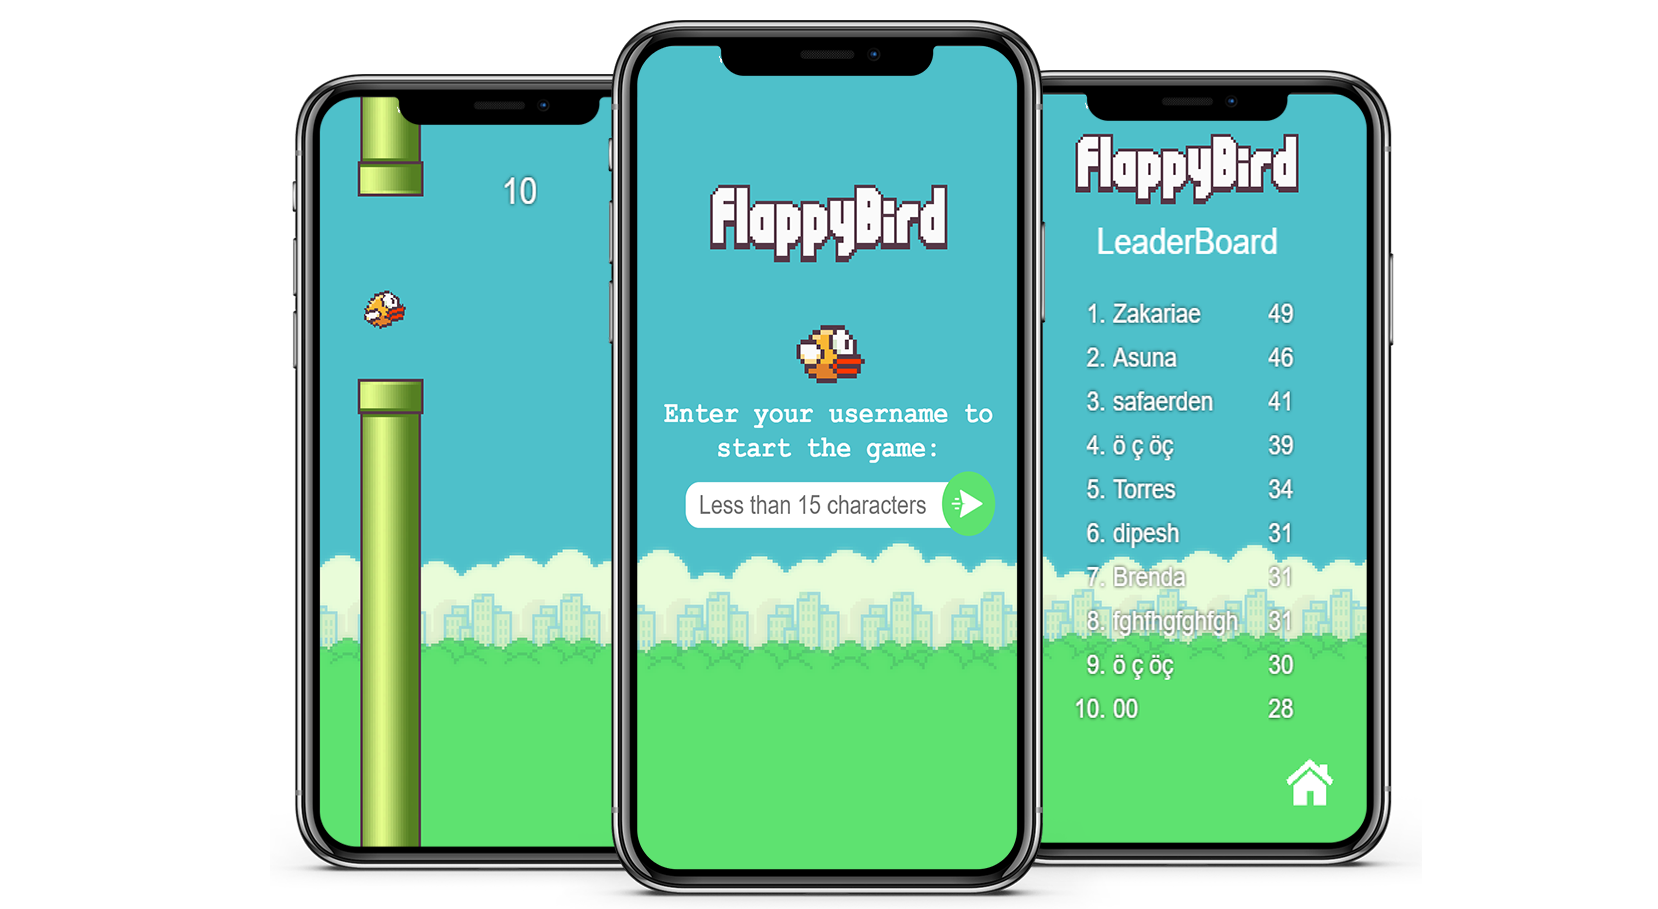 flappybirdisplay images on desktop view